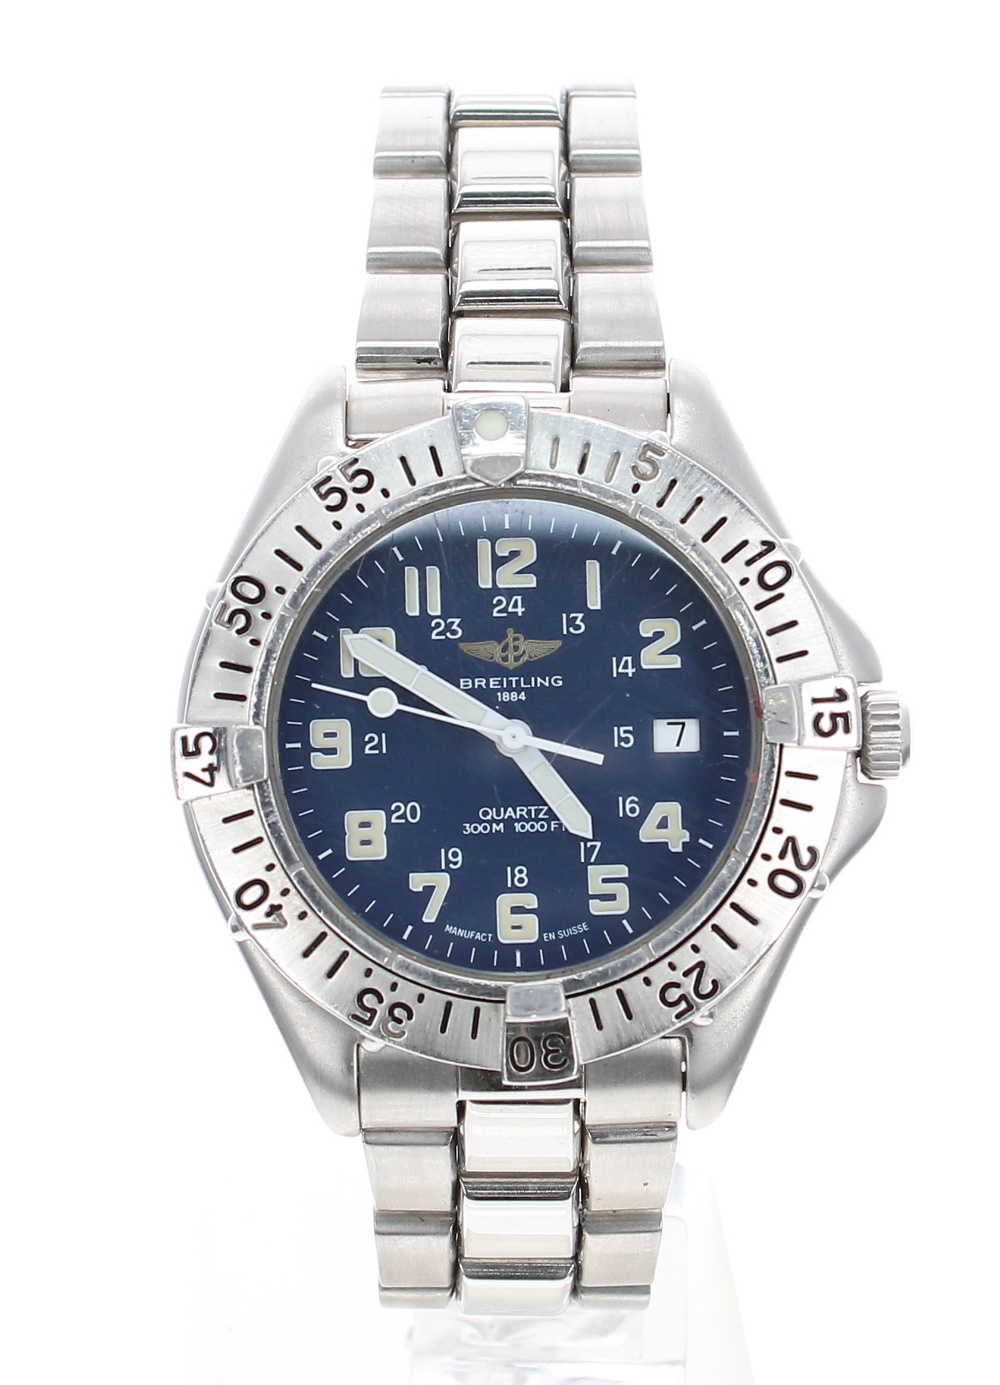 Breitling Quartz stainless steel gentleman's bracelet watch, ref. A50735, serial no. 8594, blue dial